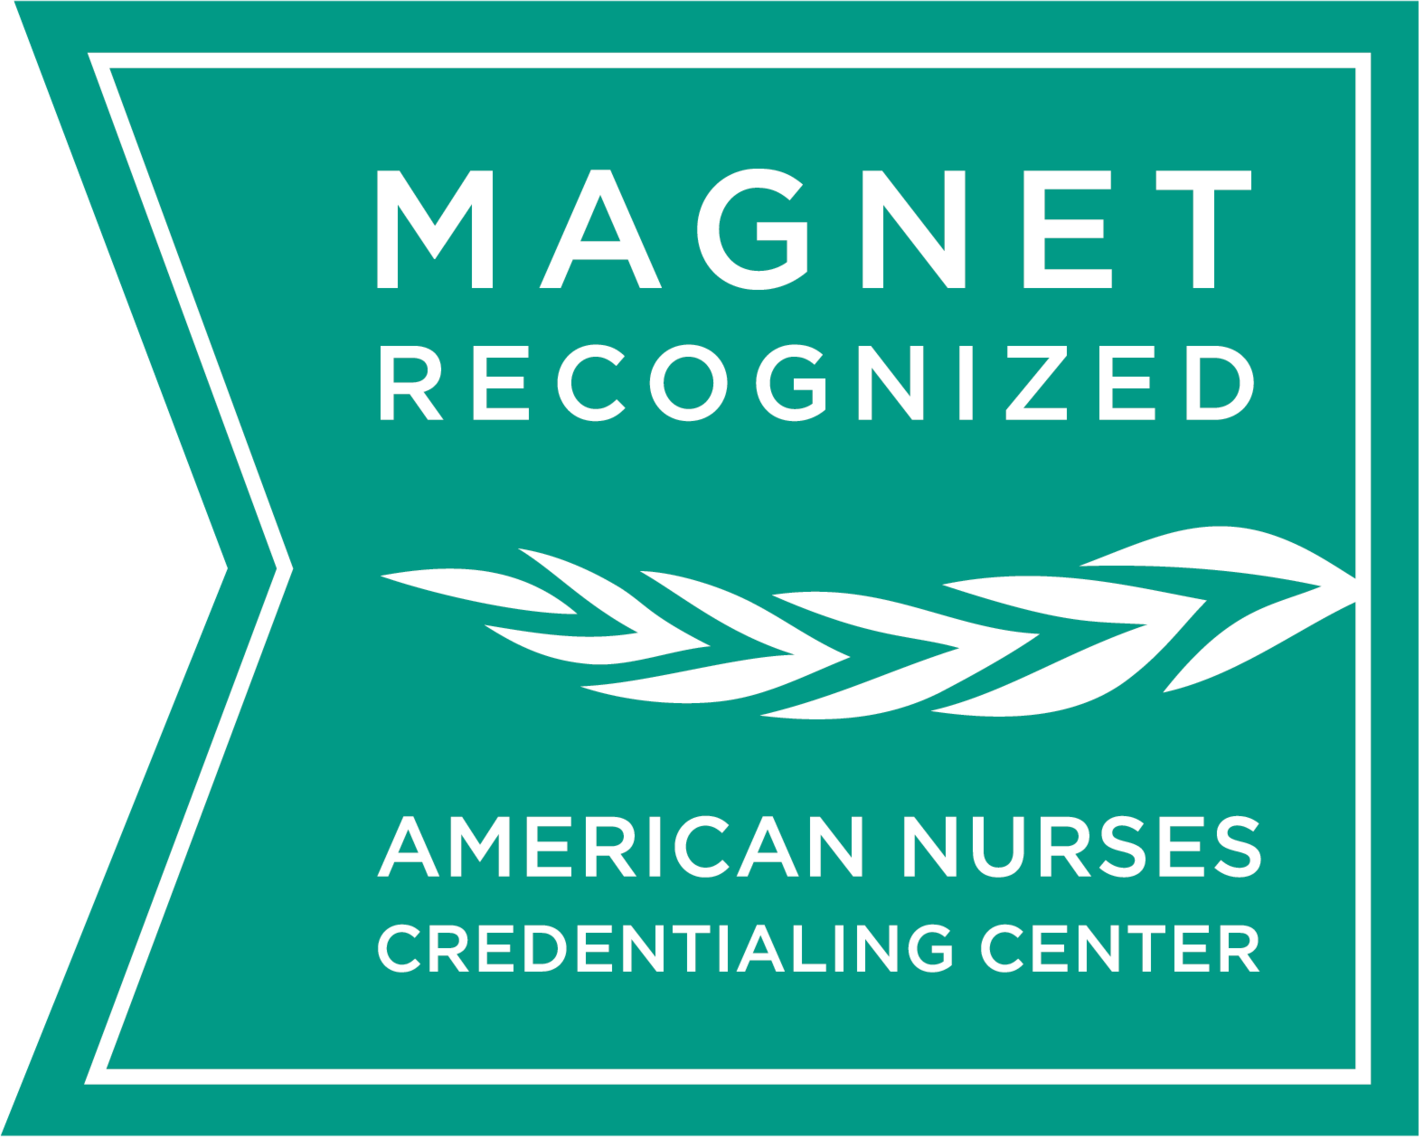 Magnet Recognized - American Nurses Credentialing Center